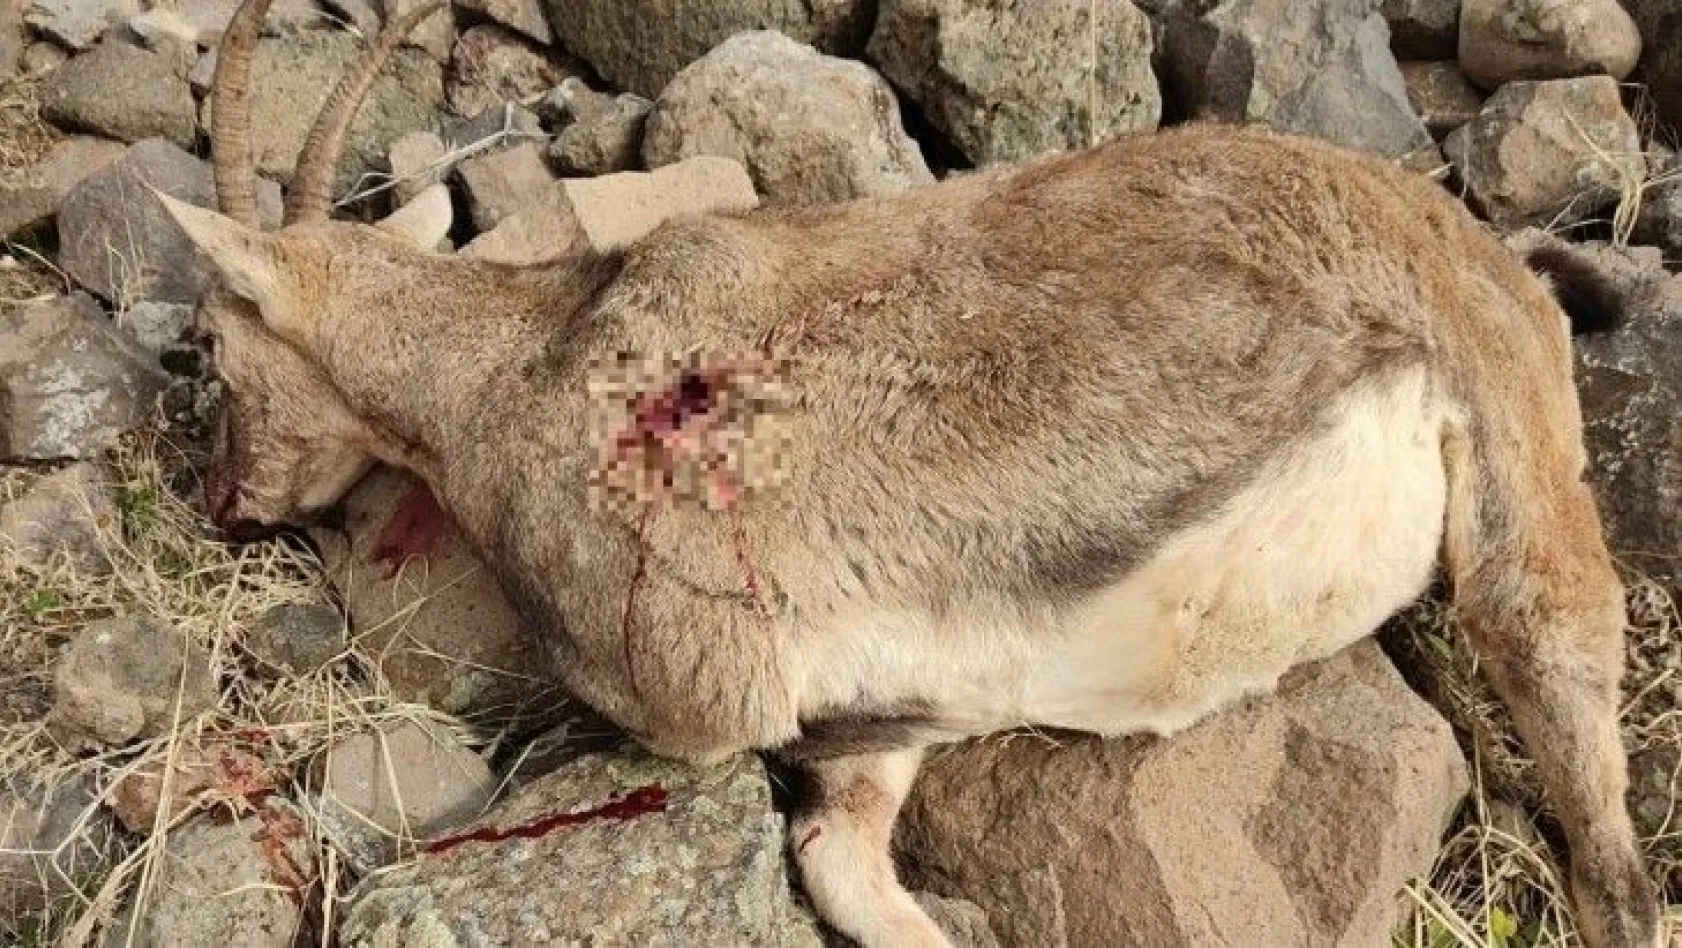 Tunceli'de dağ keçisi vuran şahsa 27 bin 777 TL ceza